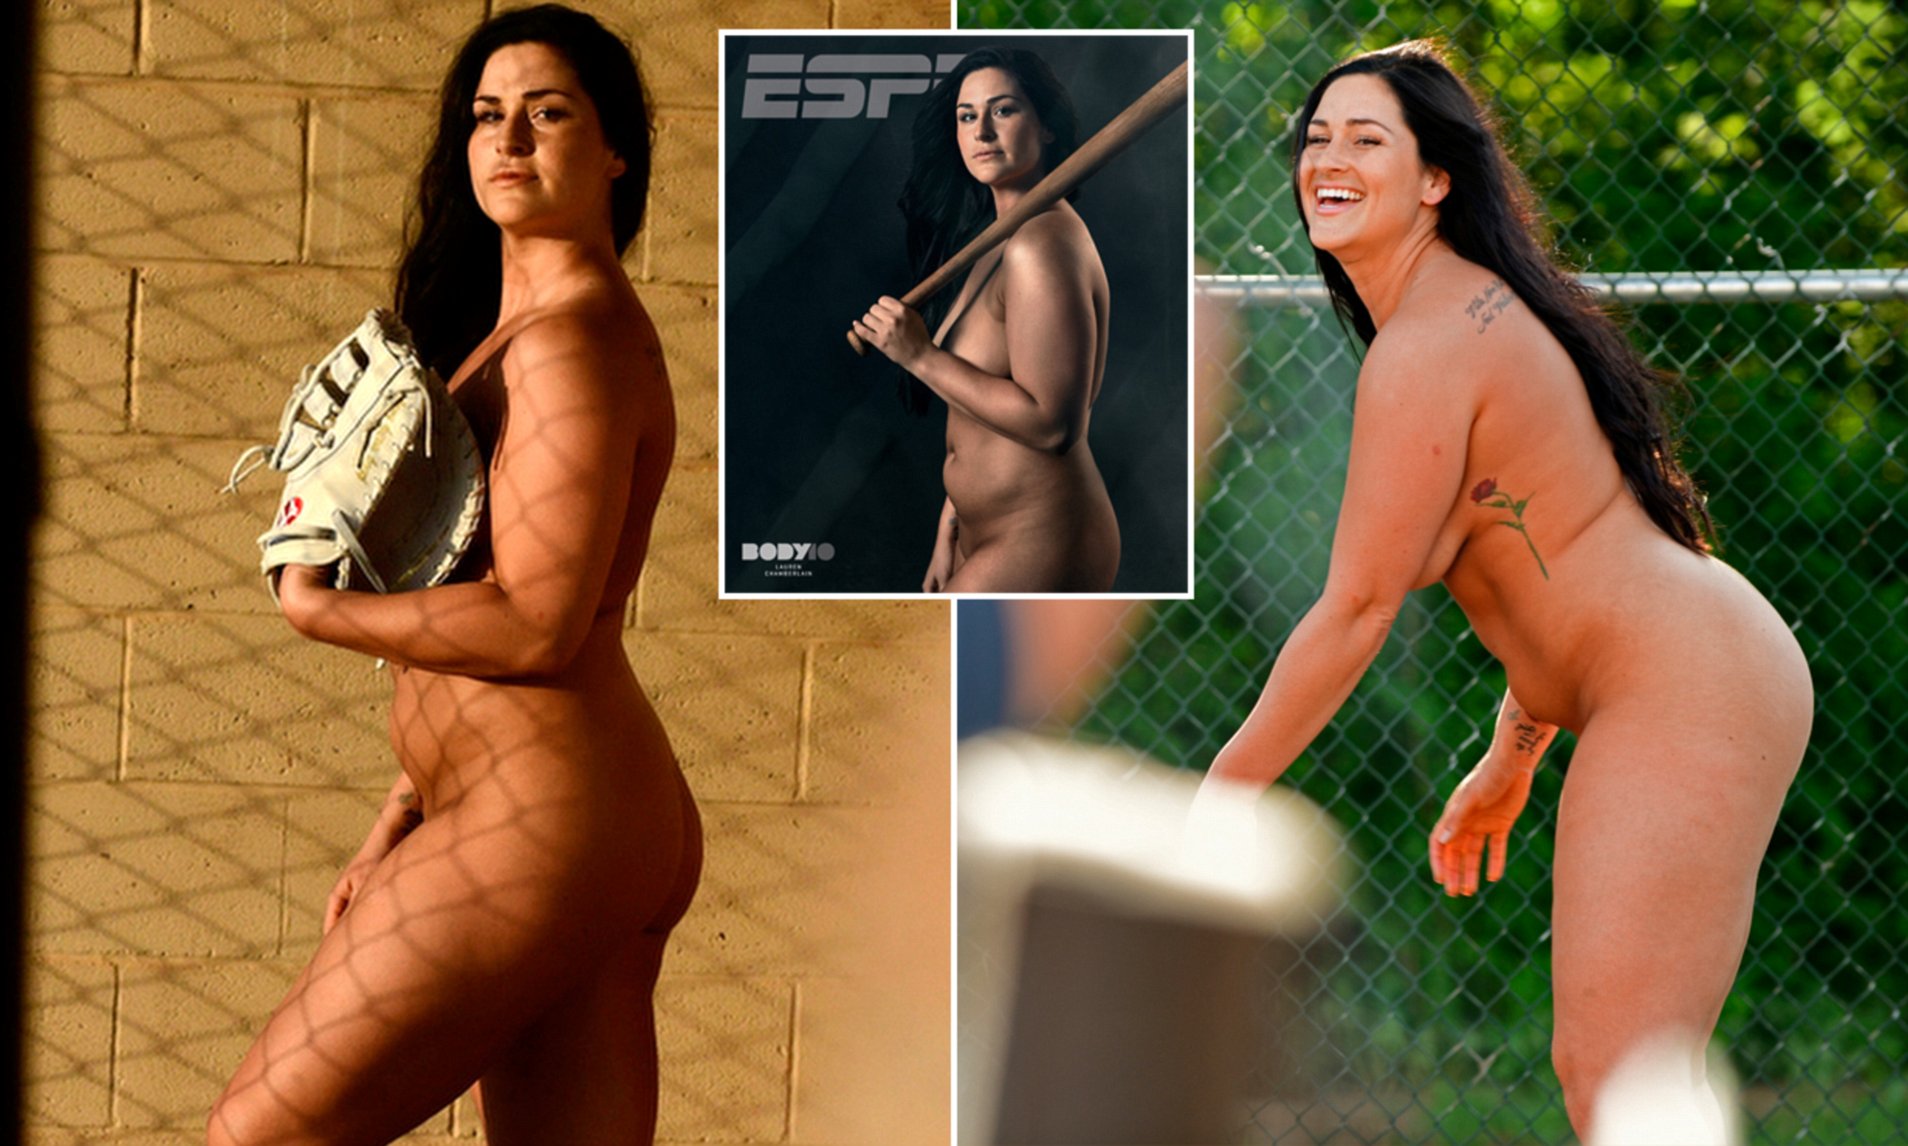 beth gilpin share nude softball player photos